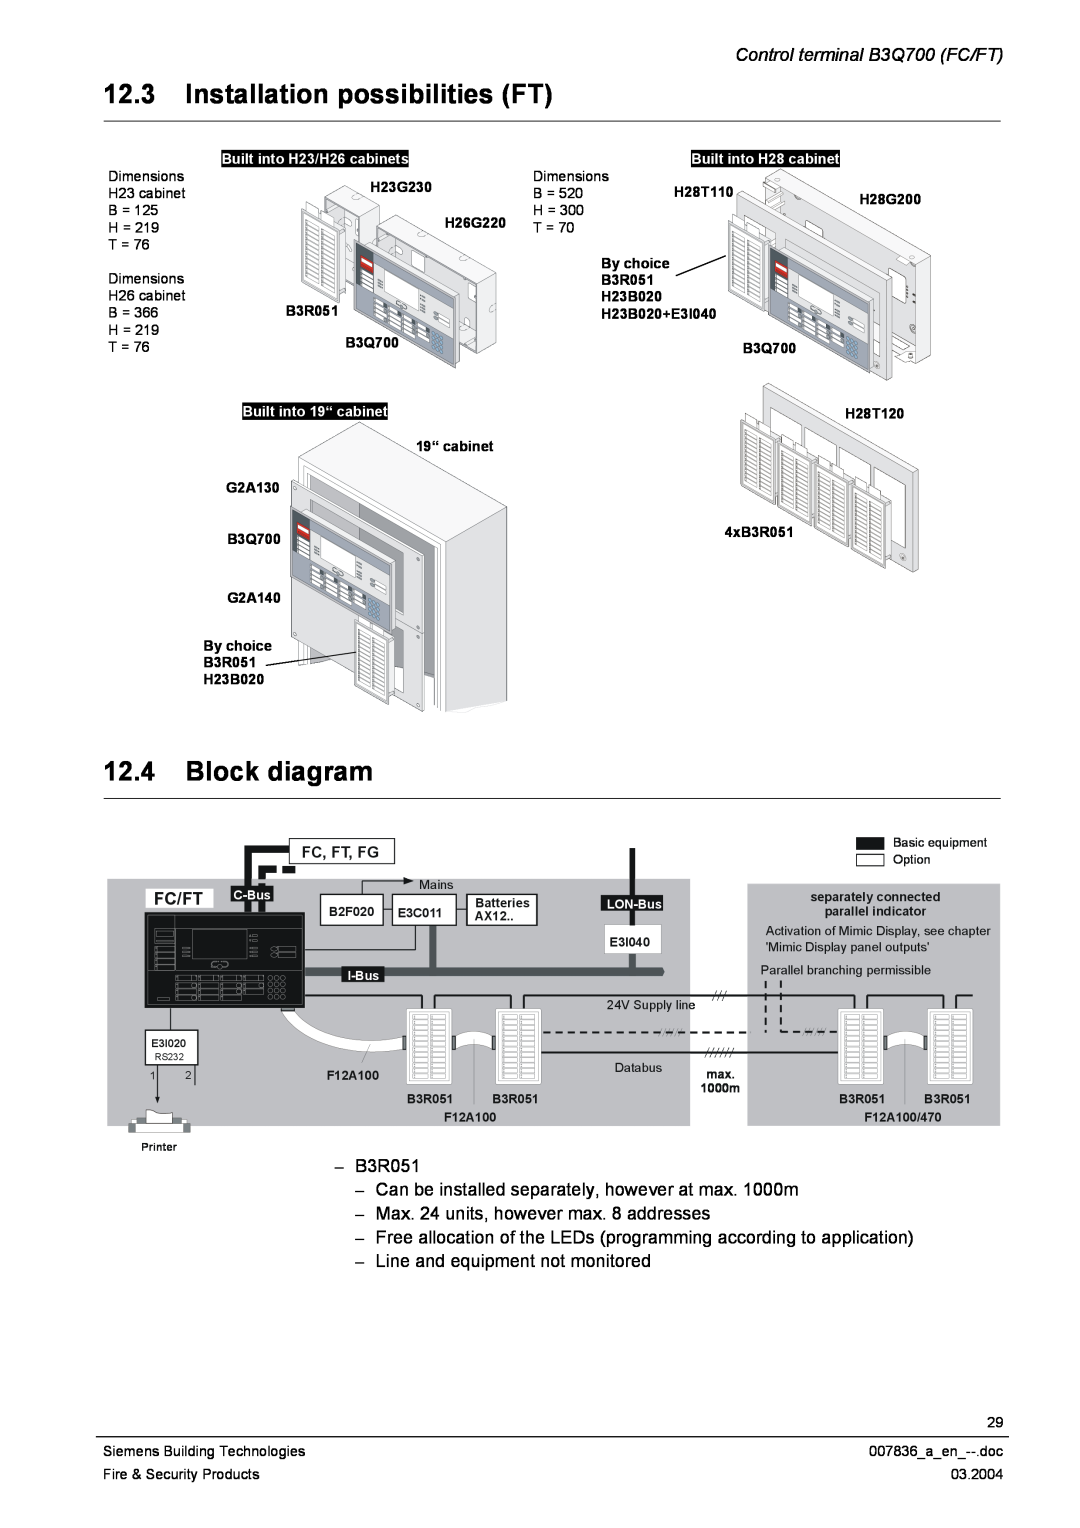 Siemens FC700A 12.3Installation possibilities FT, 12.4Block diagram, Control terminal B3Q700 FC/FT, Fc/Ft, Fc, Ft, Fg 